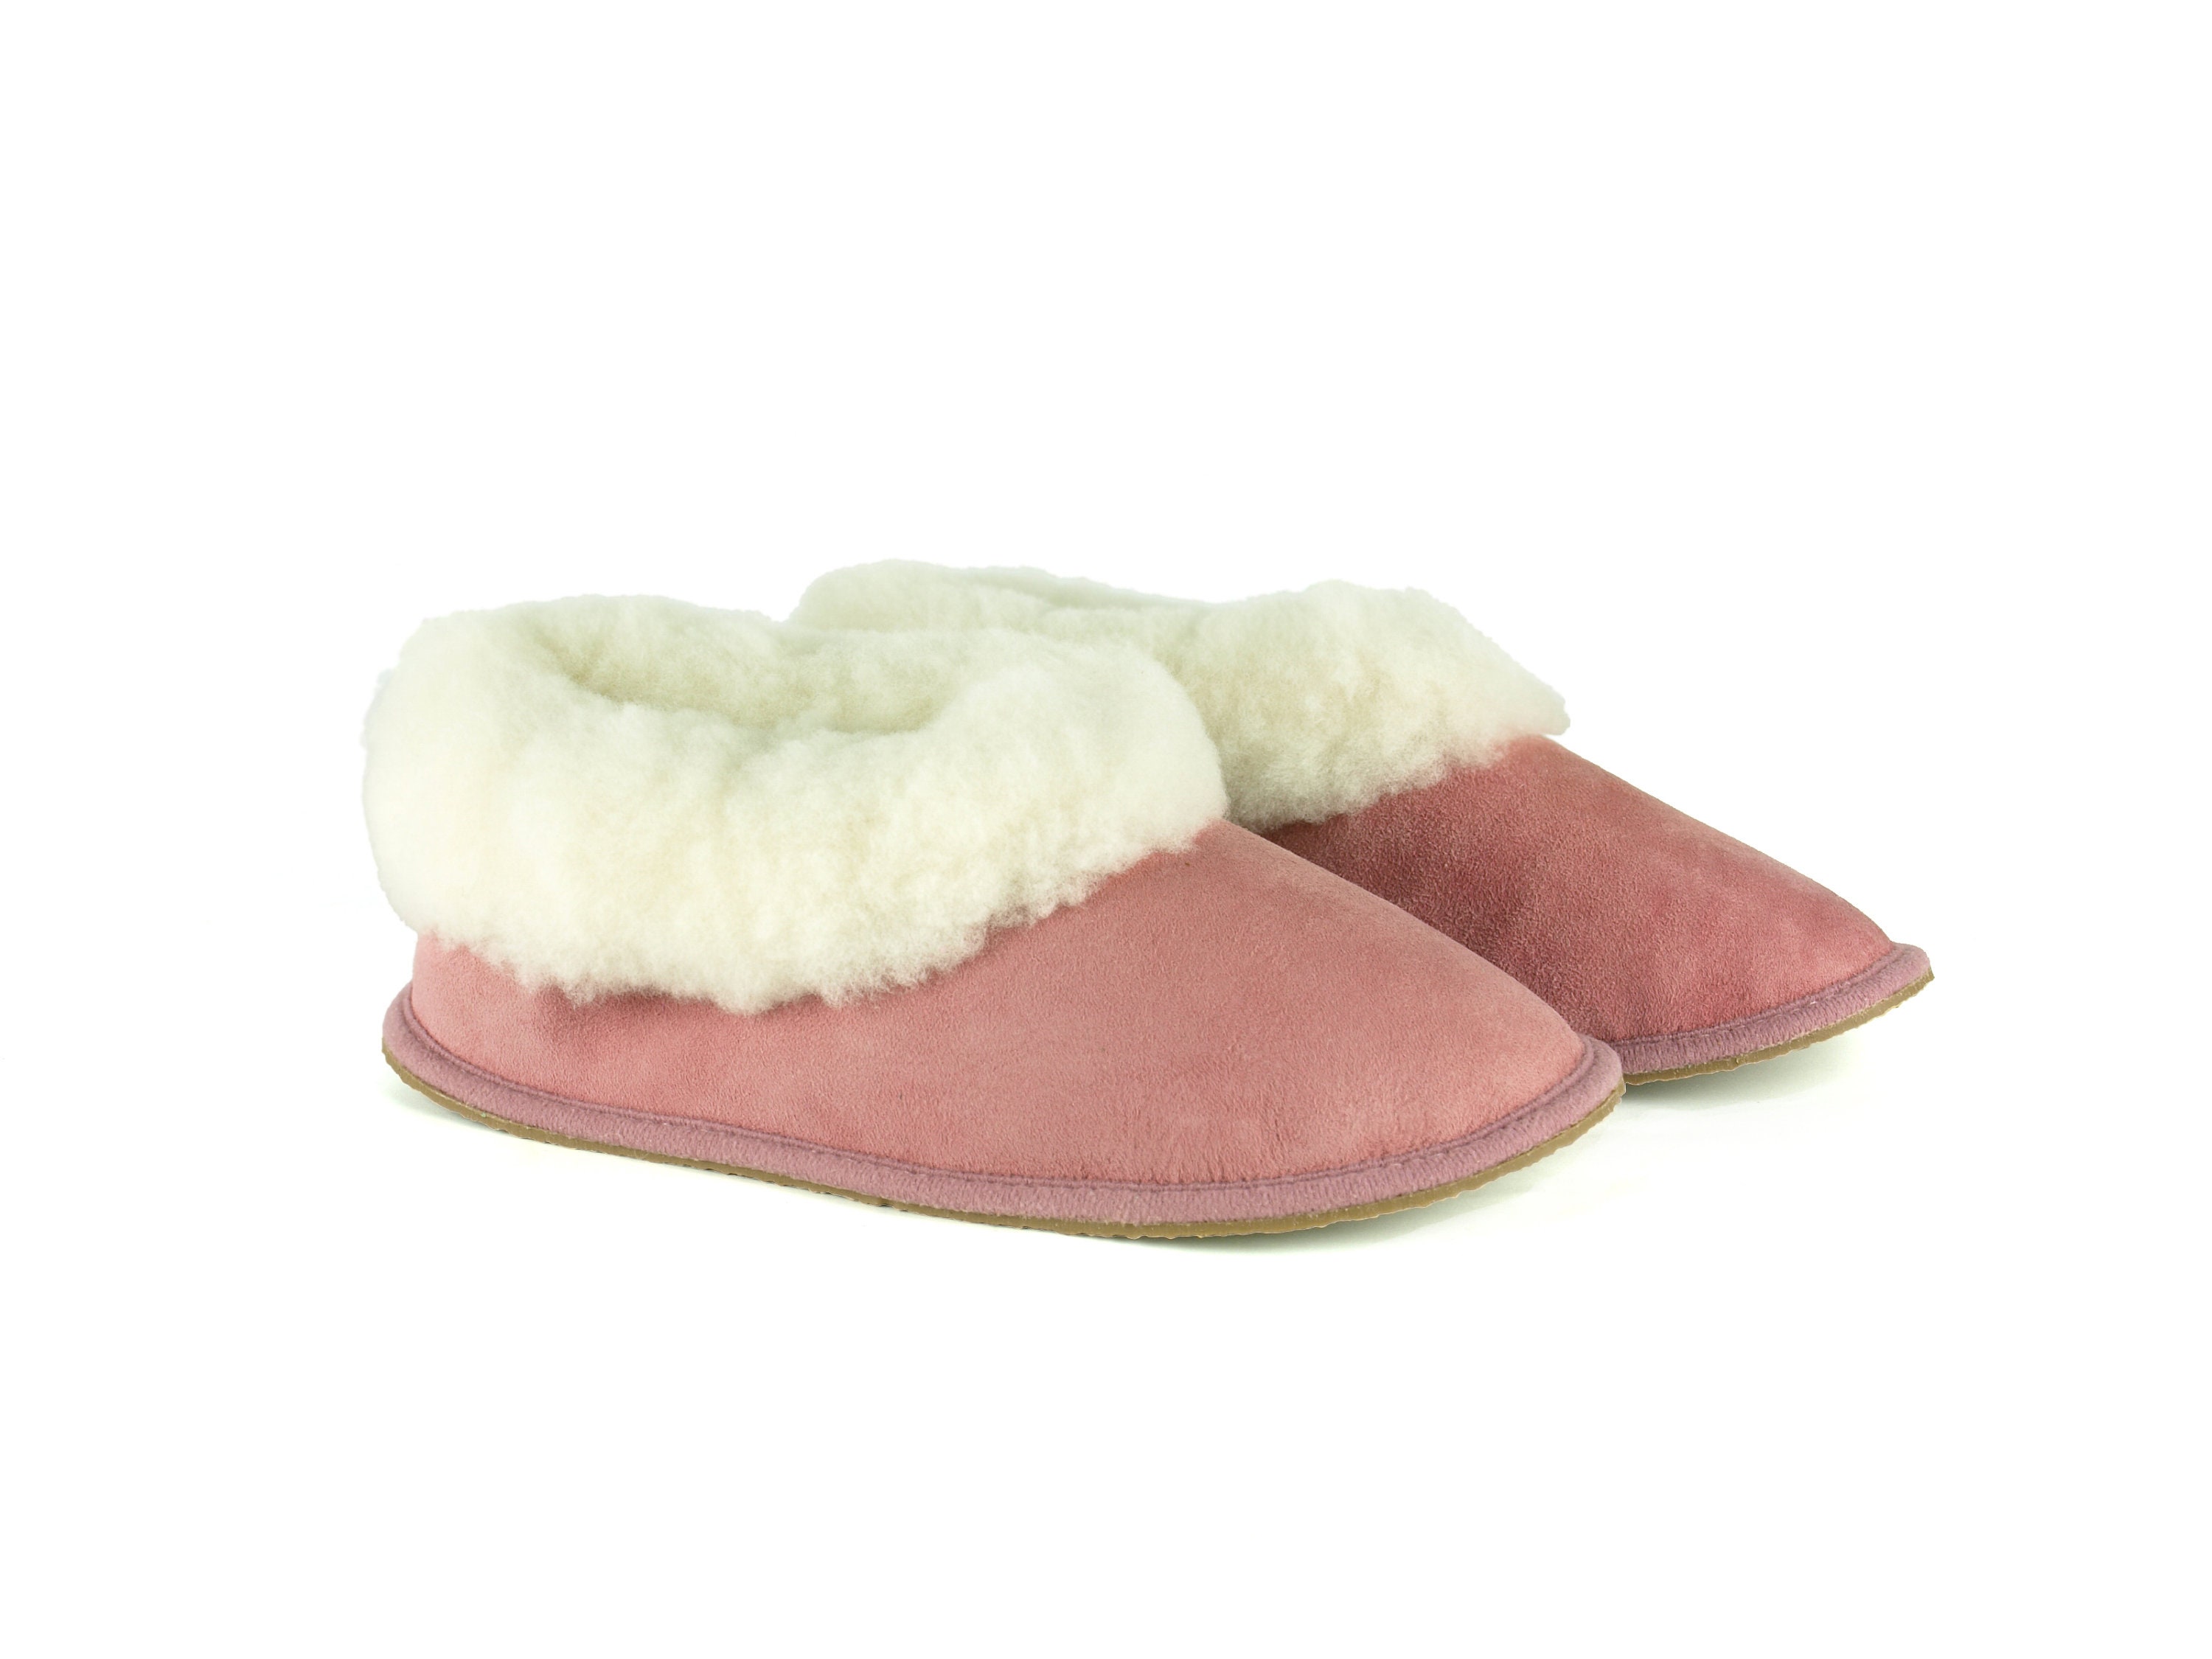 tan sheepskin slippers